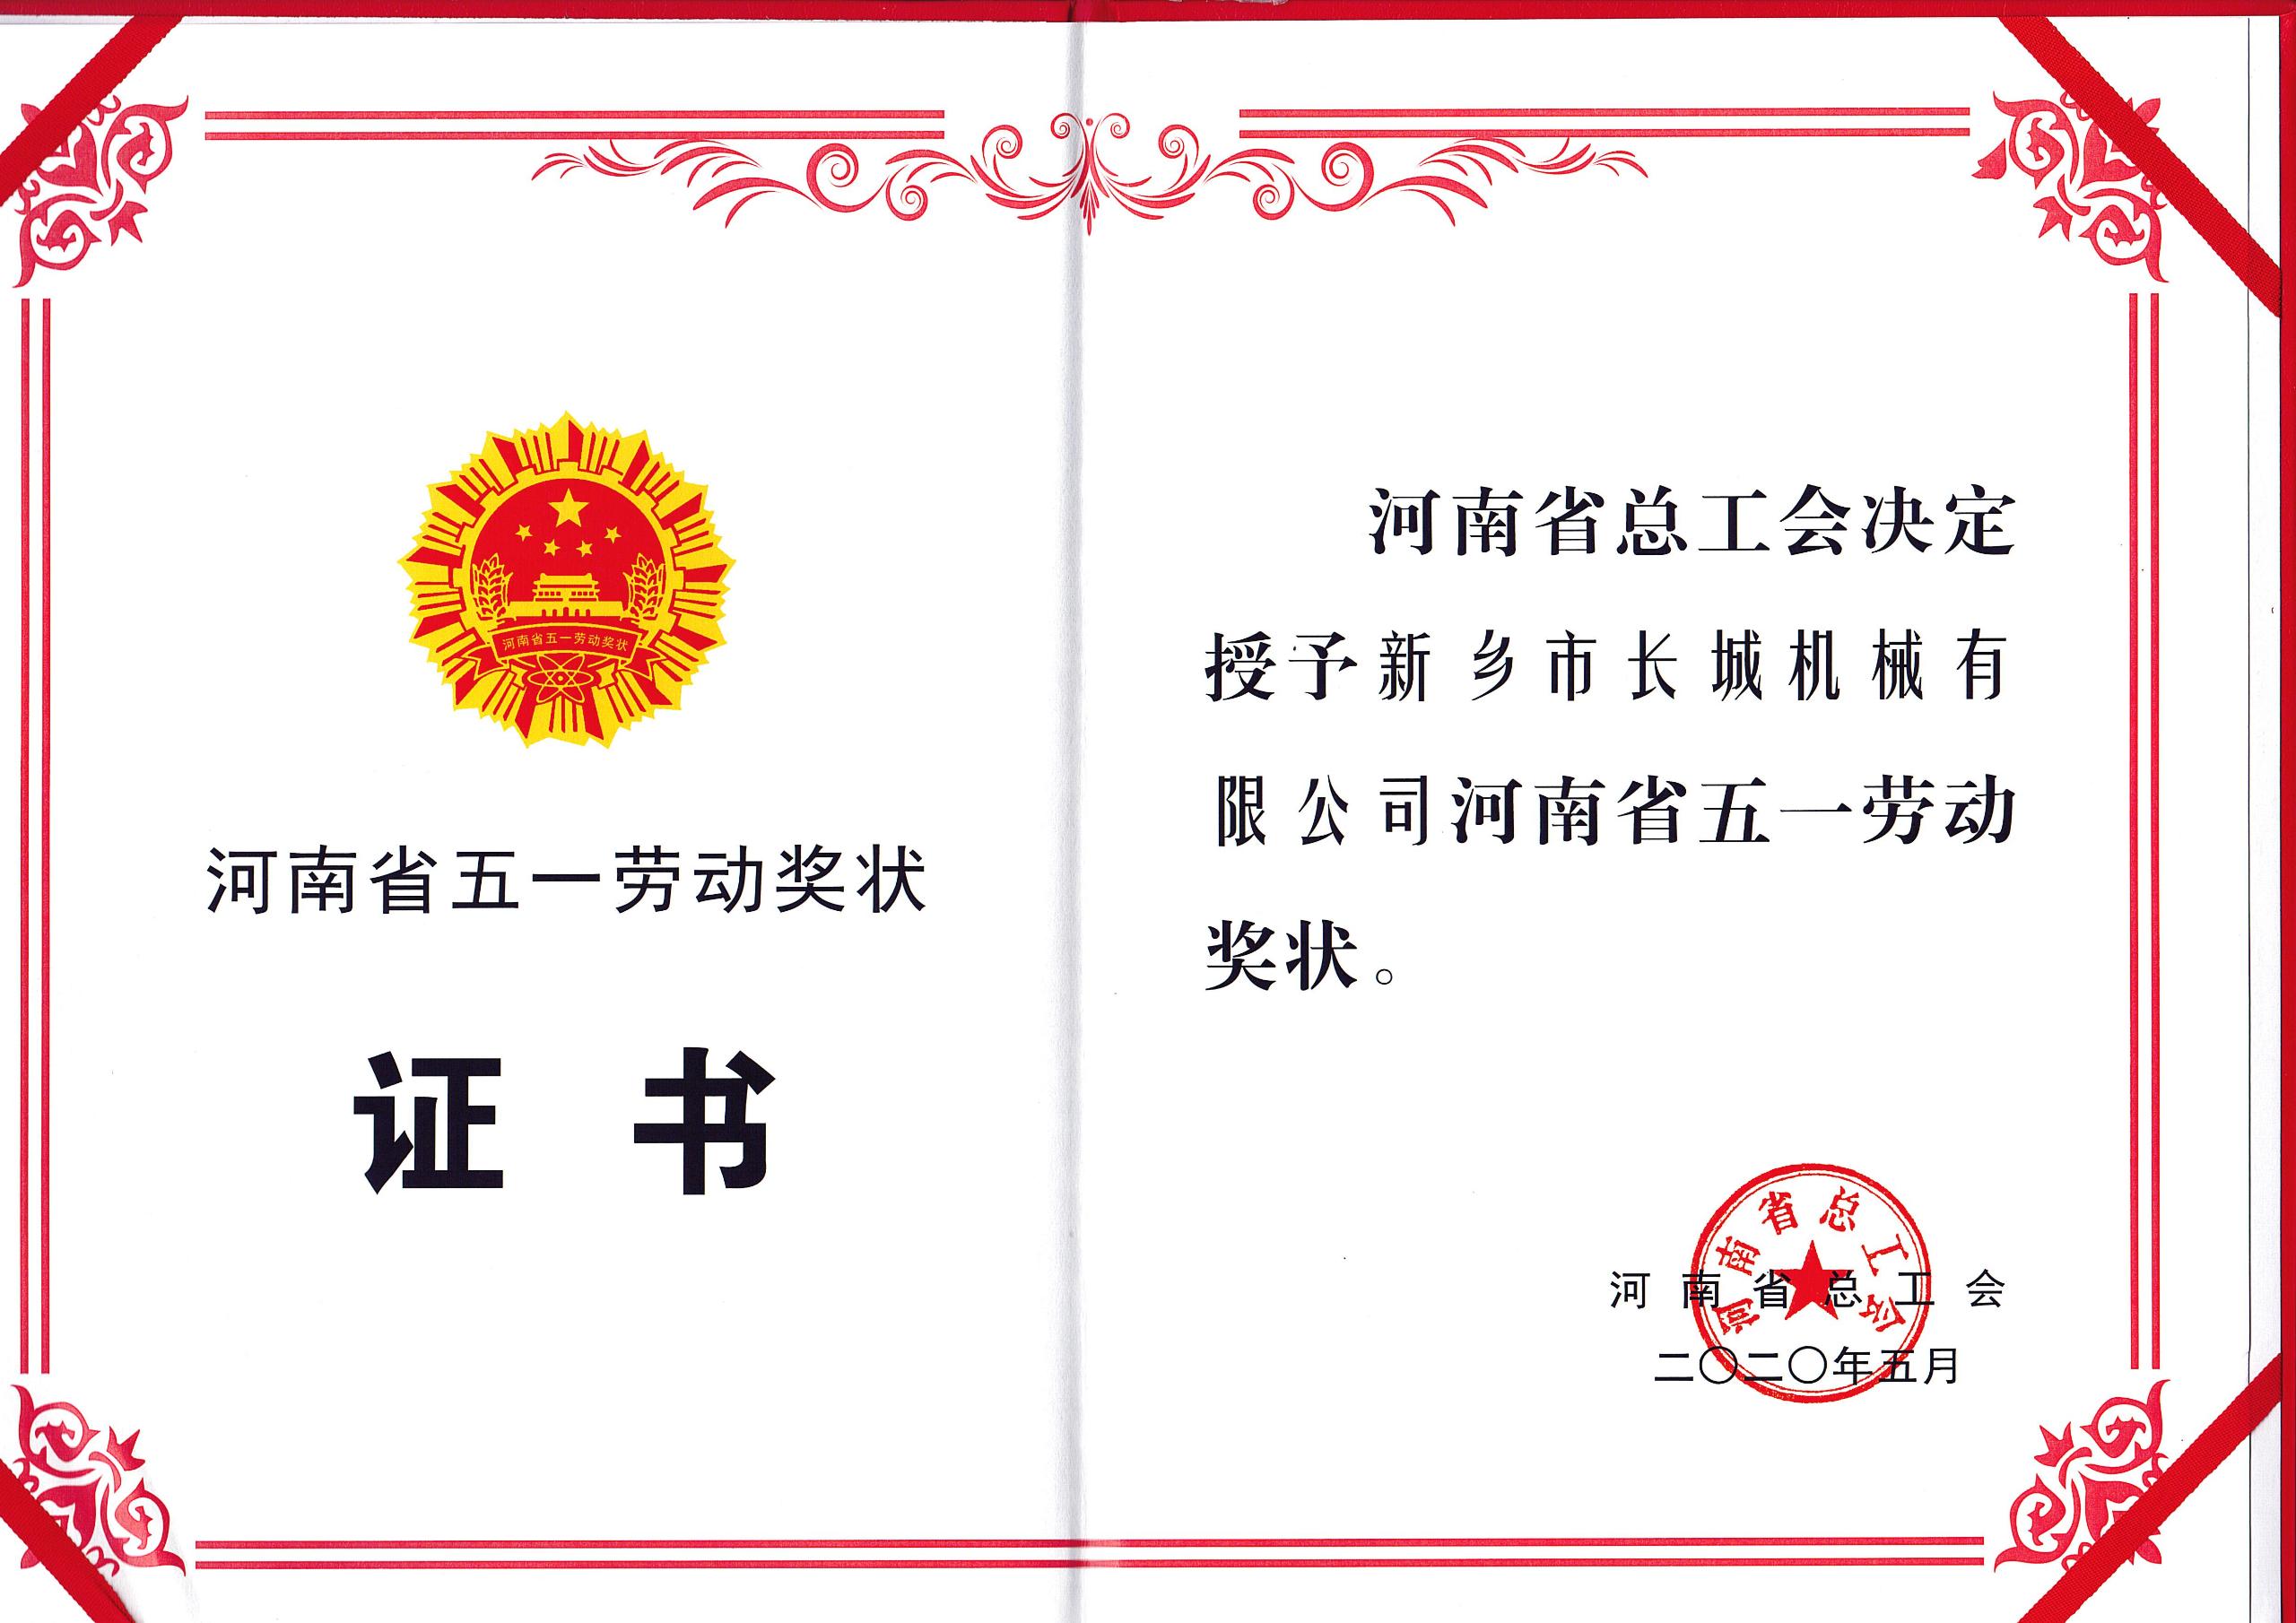 Labor Day Certificate